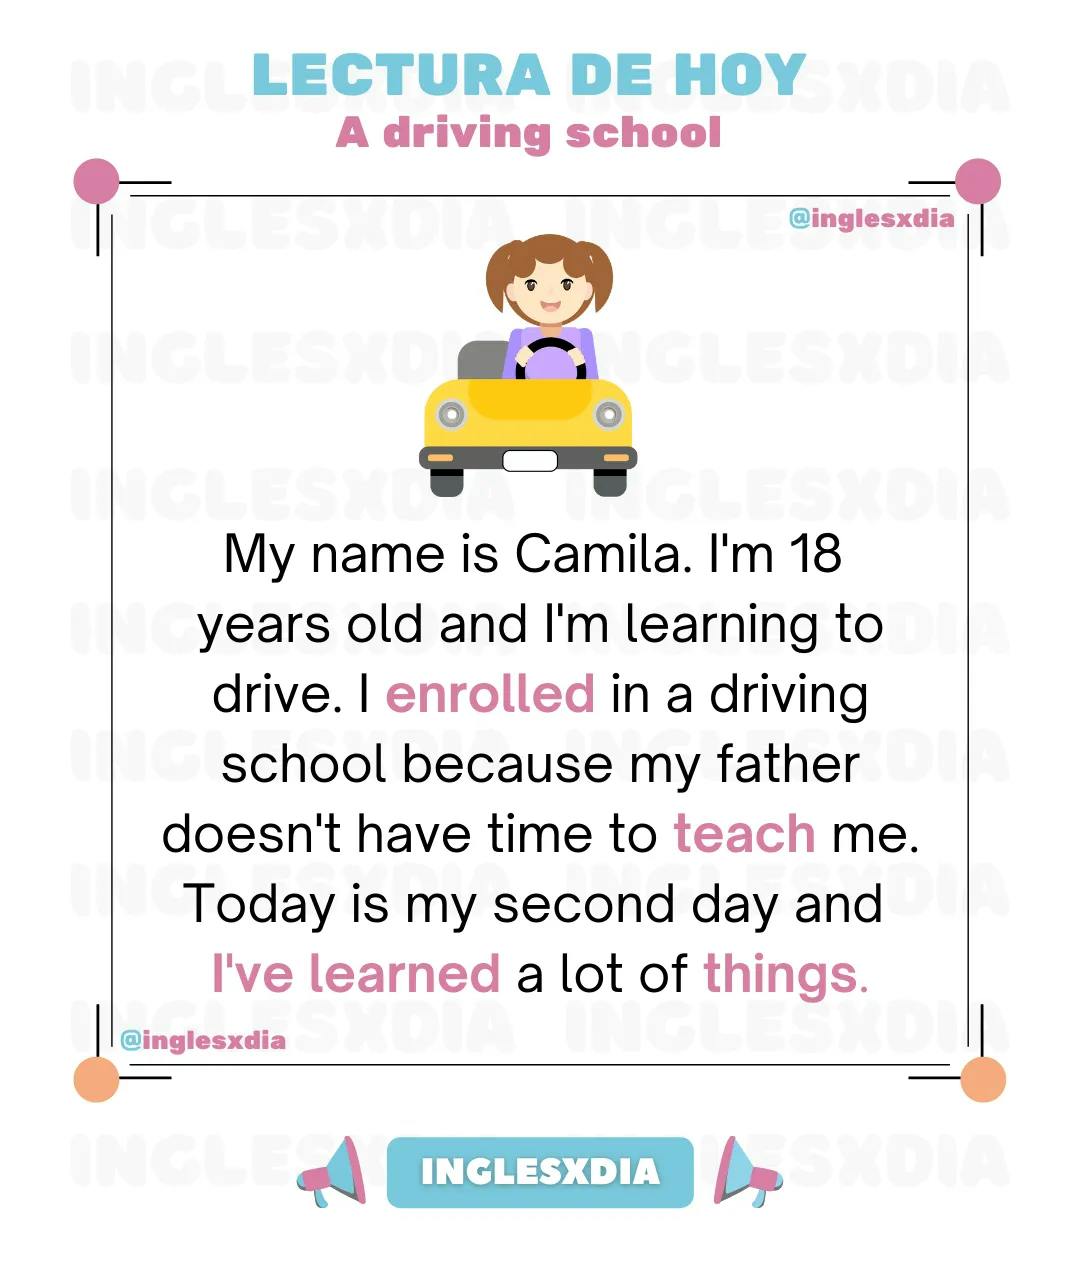 A driving school